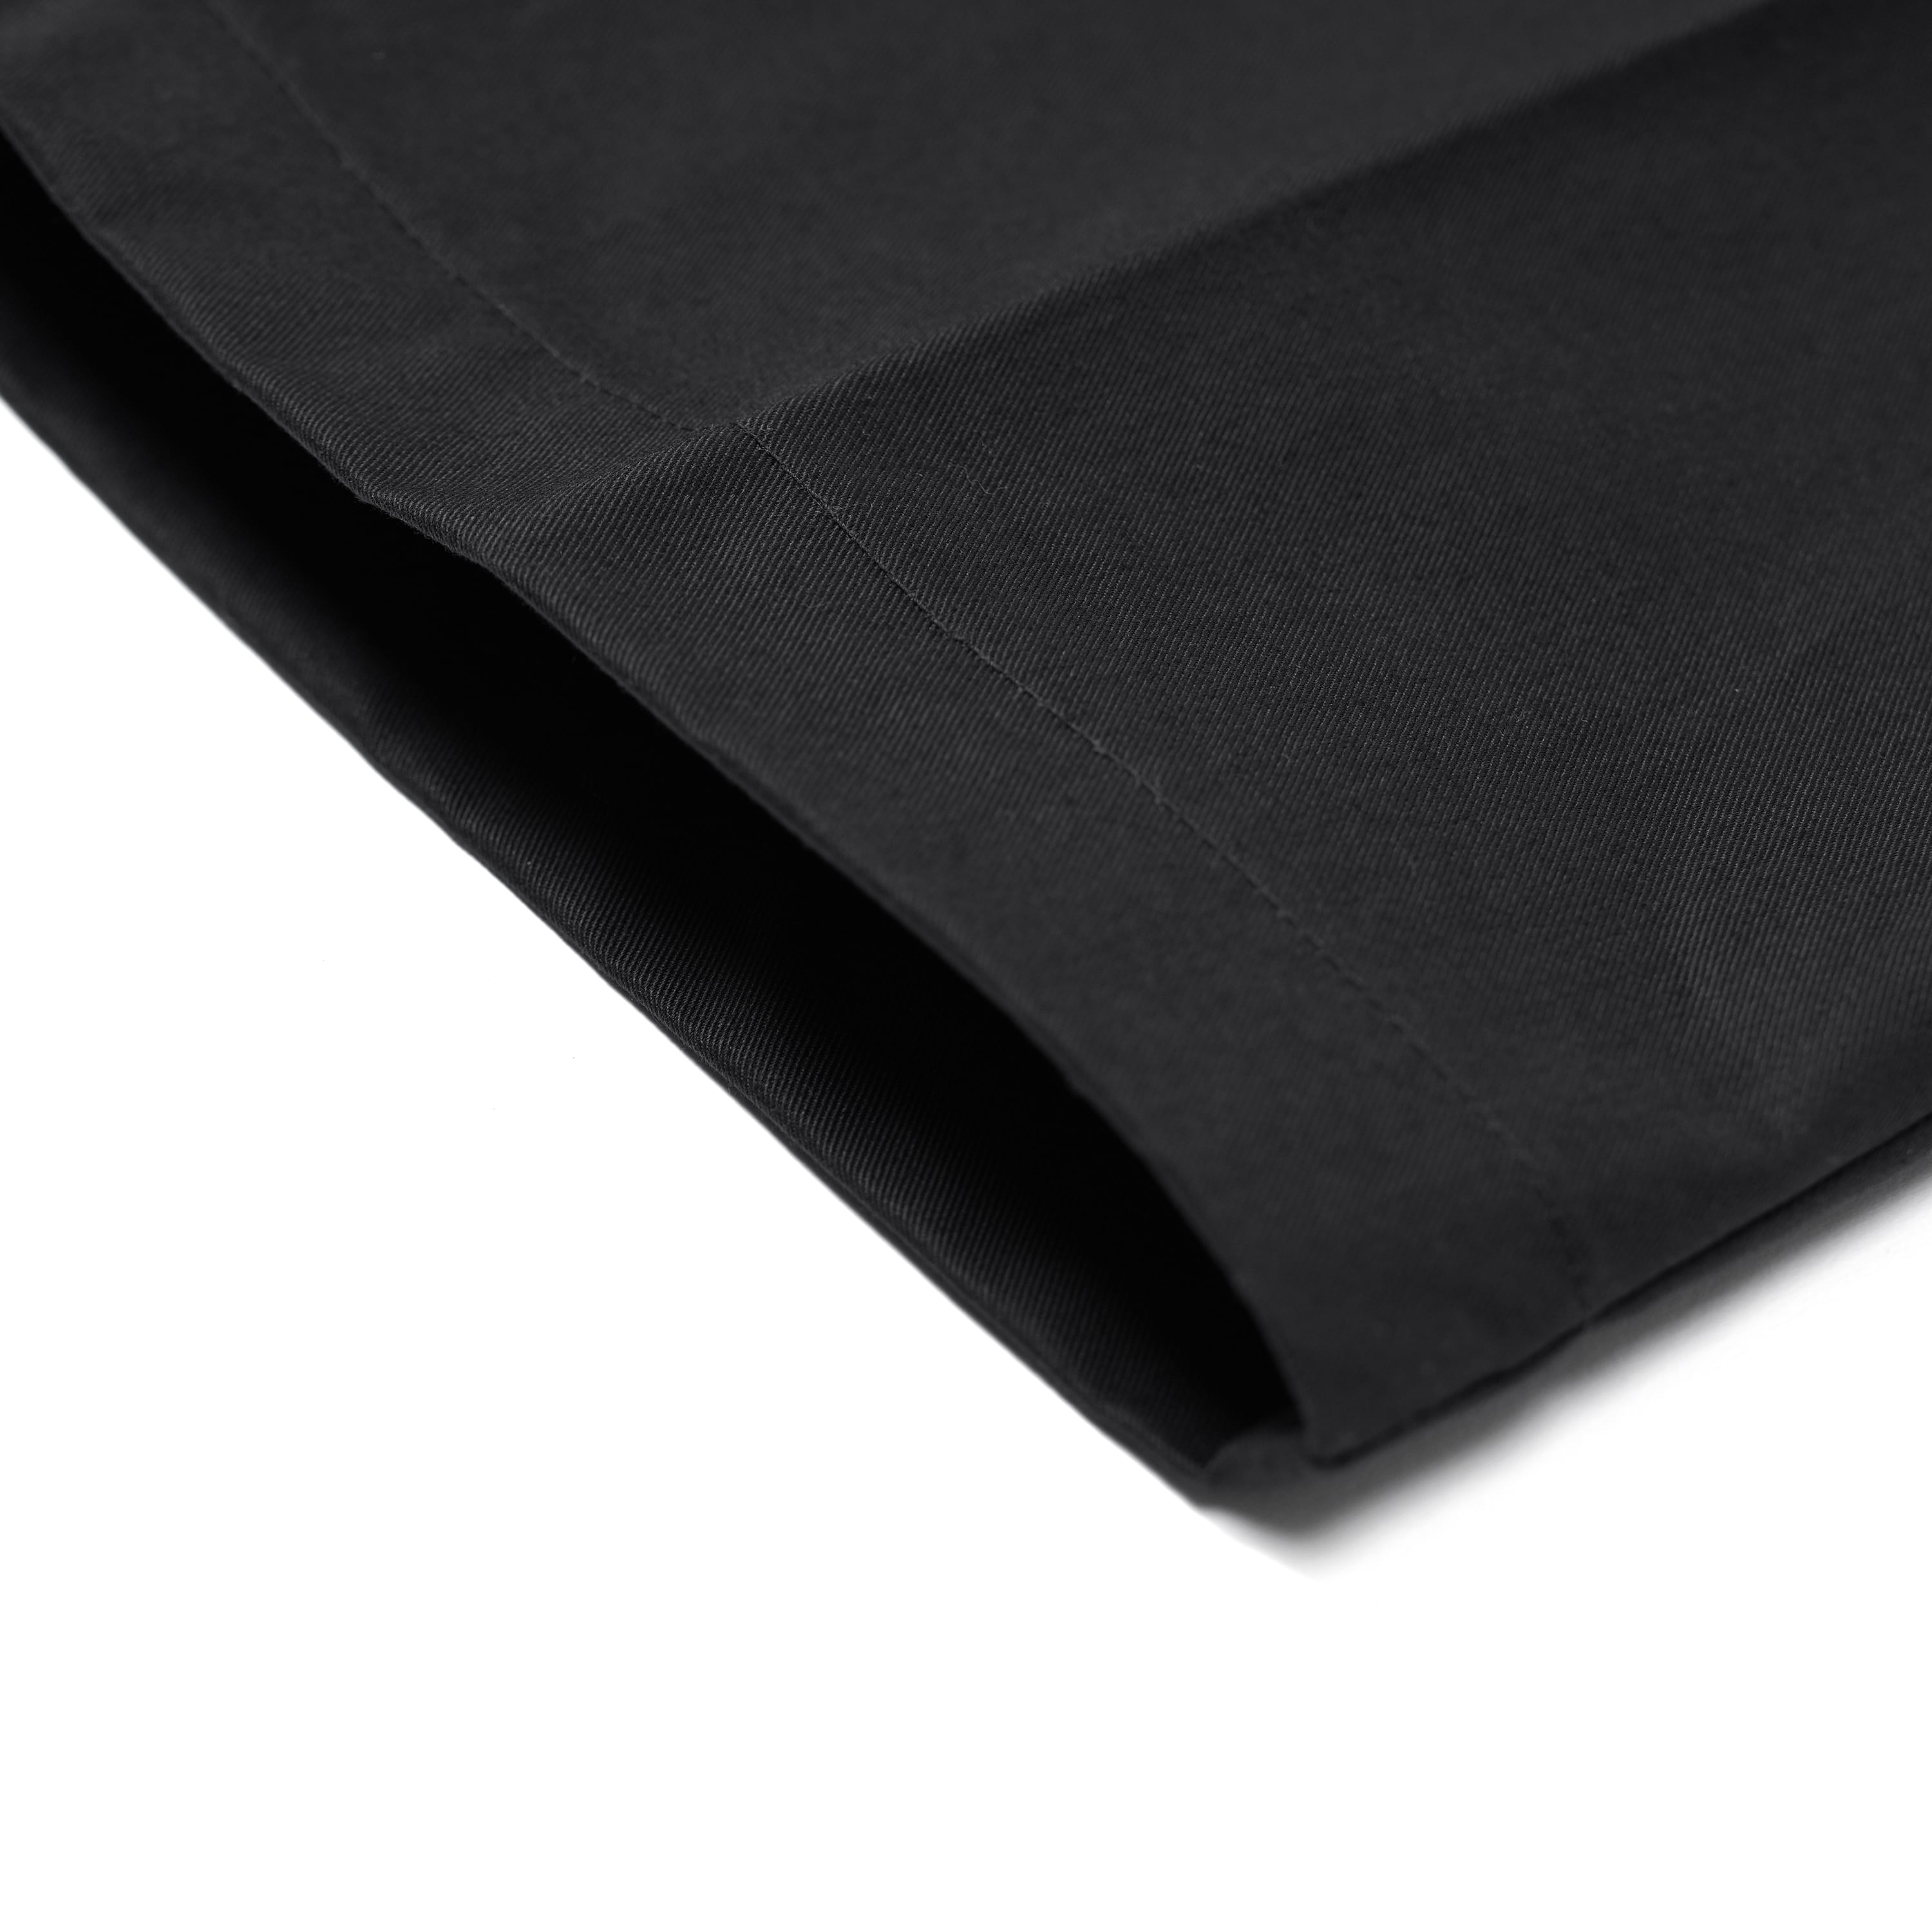 Standard Cotton Work Pants (black)